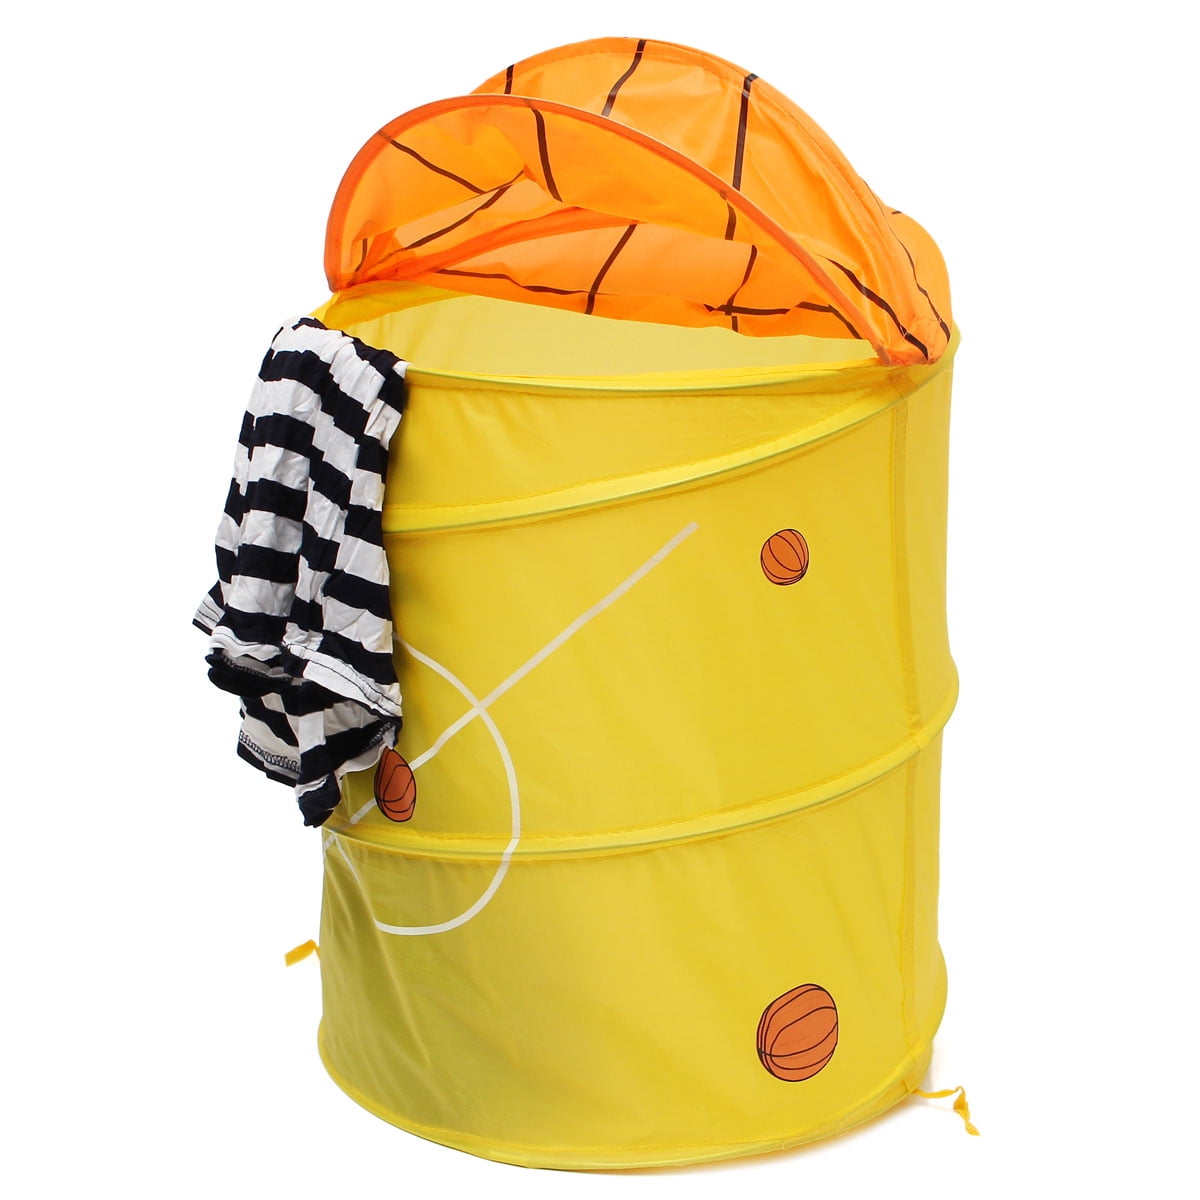 【15%OFF】Foldable Kid Toy Storage Laundry Hamper Clothes Basket Washing Bag Buck 